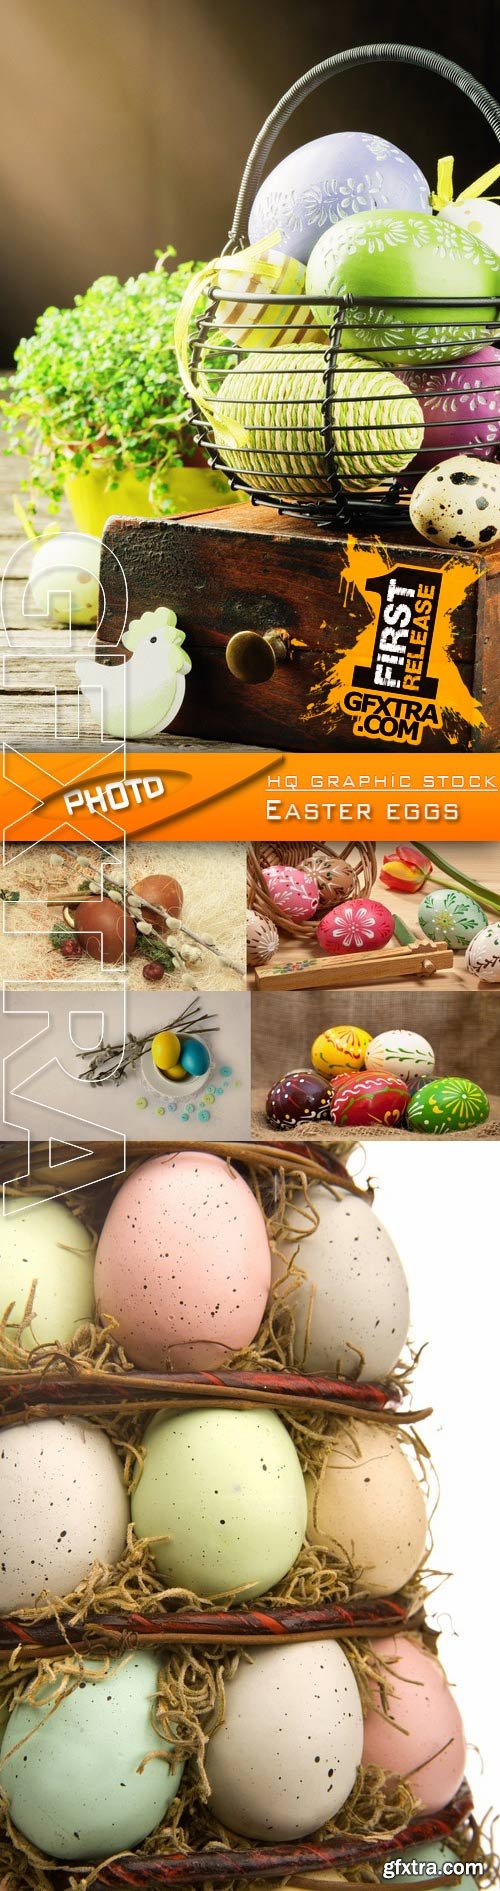 Stock Photo - Easter eggs